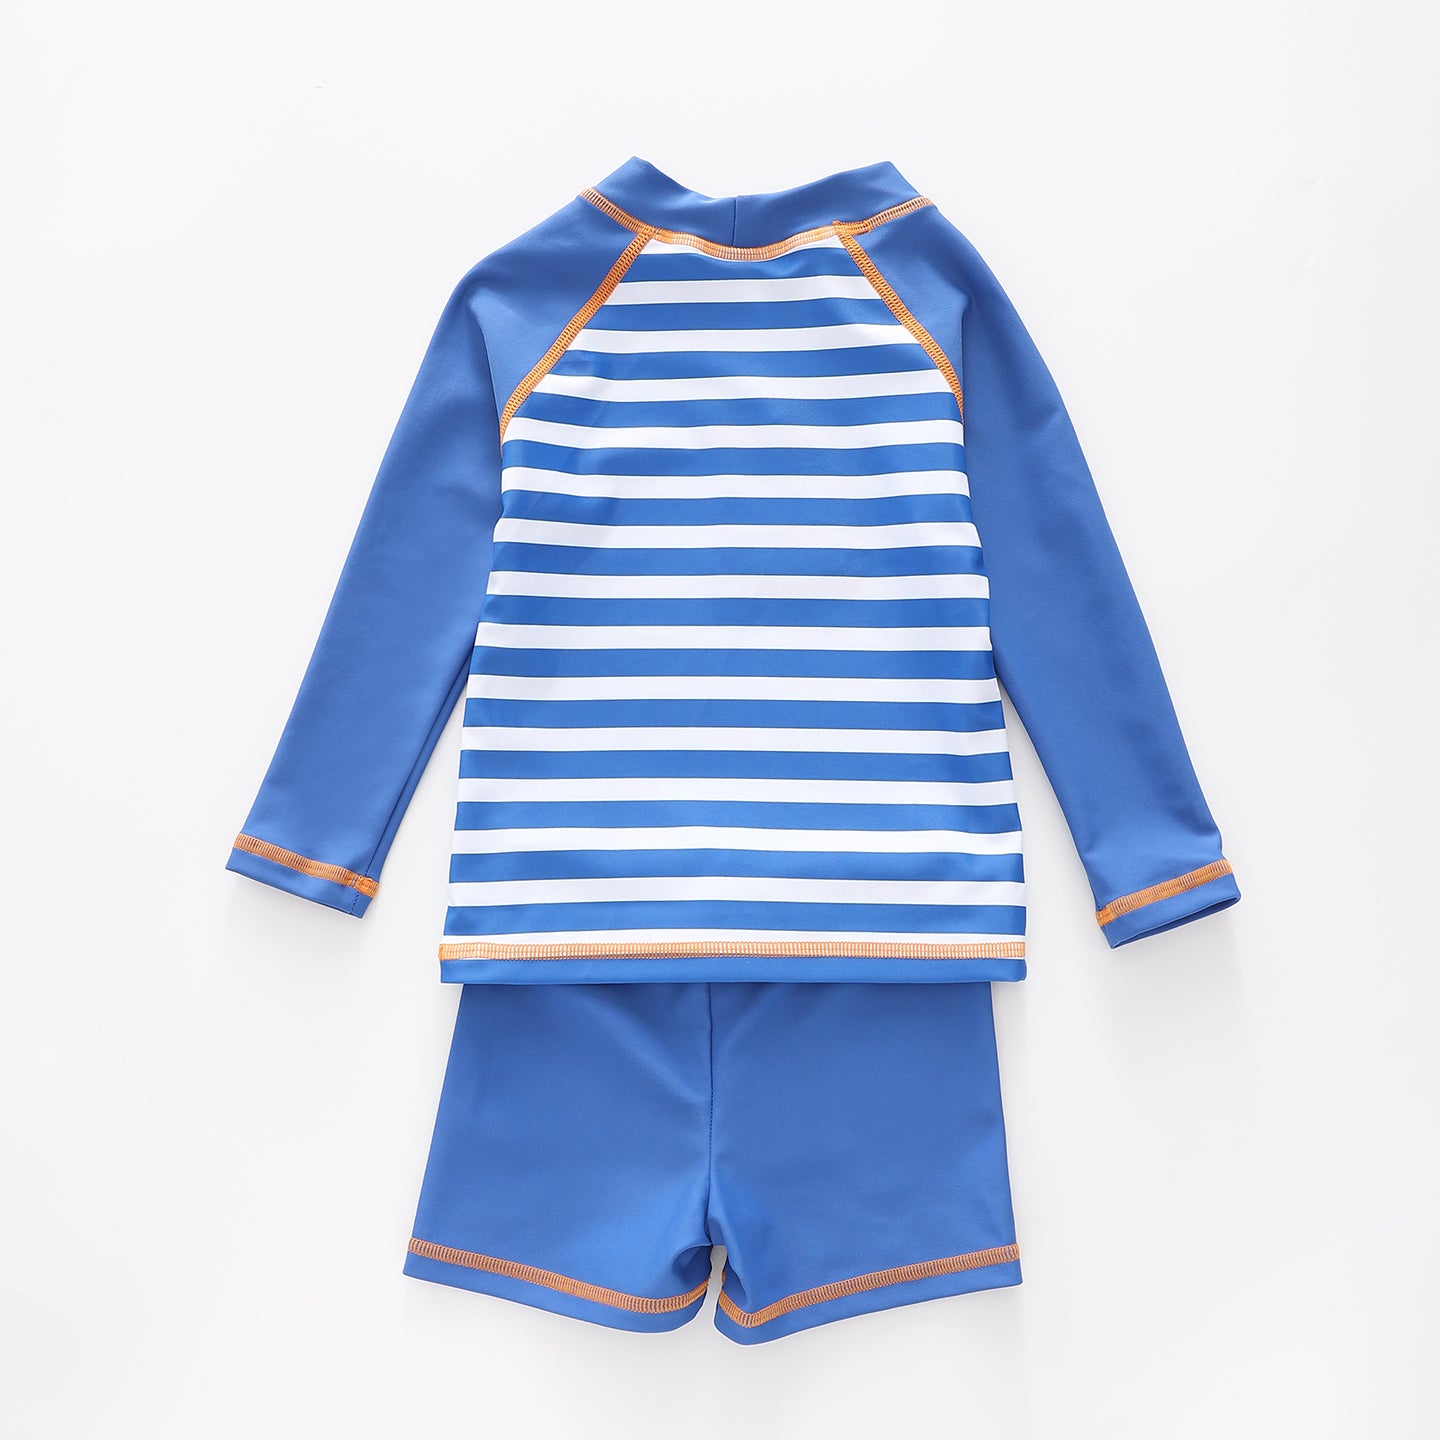 Boy's Blue Striped Lighthouse Print Two Piece Swimsuit Set